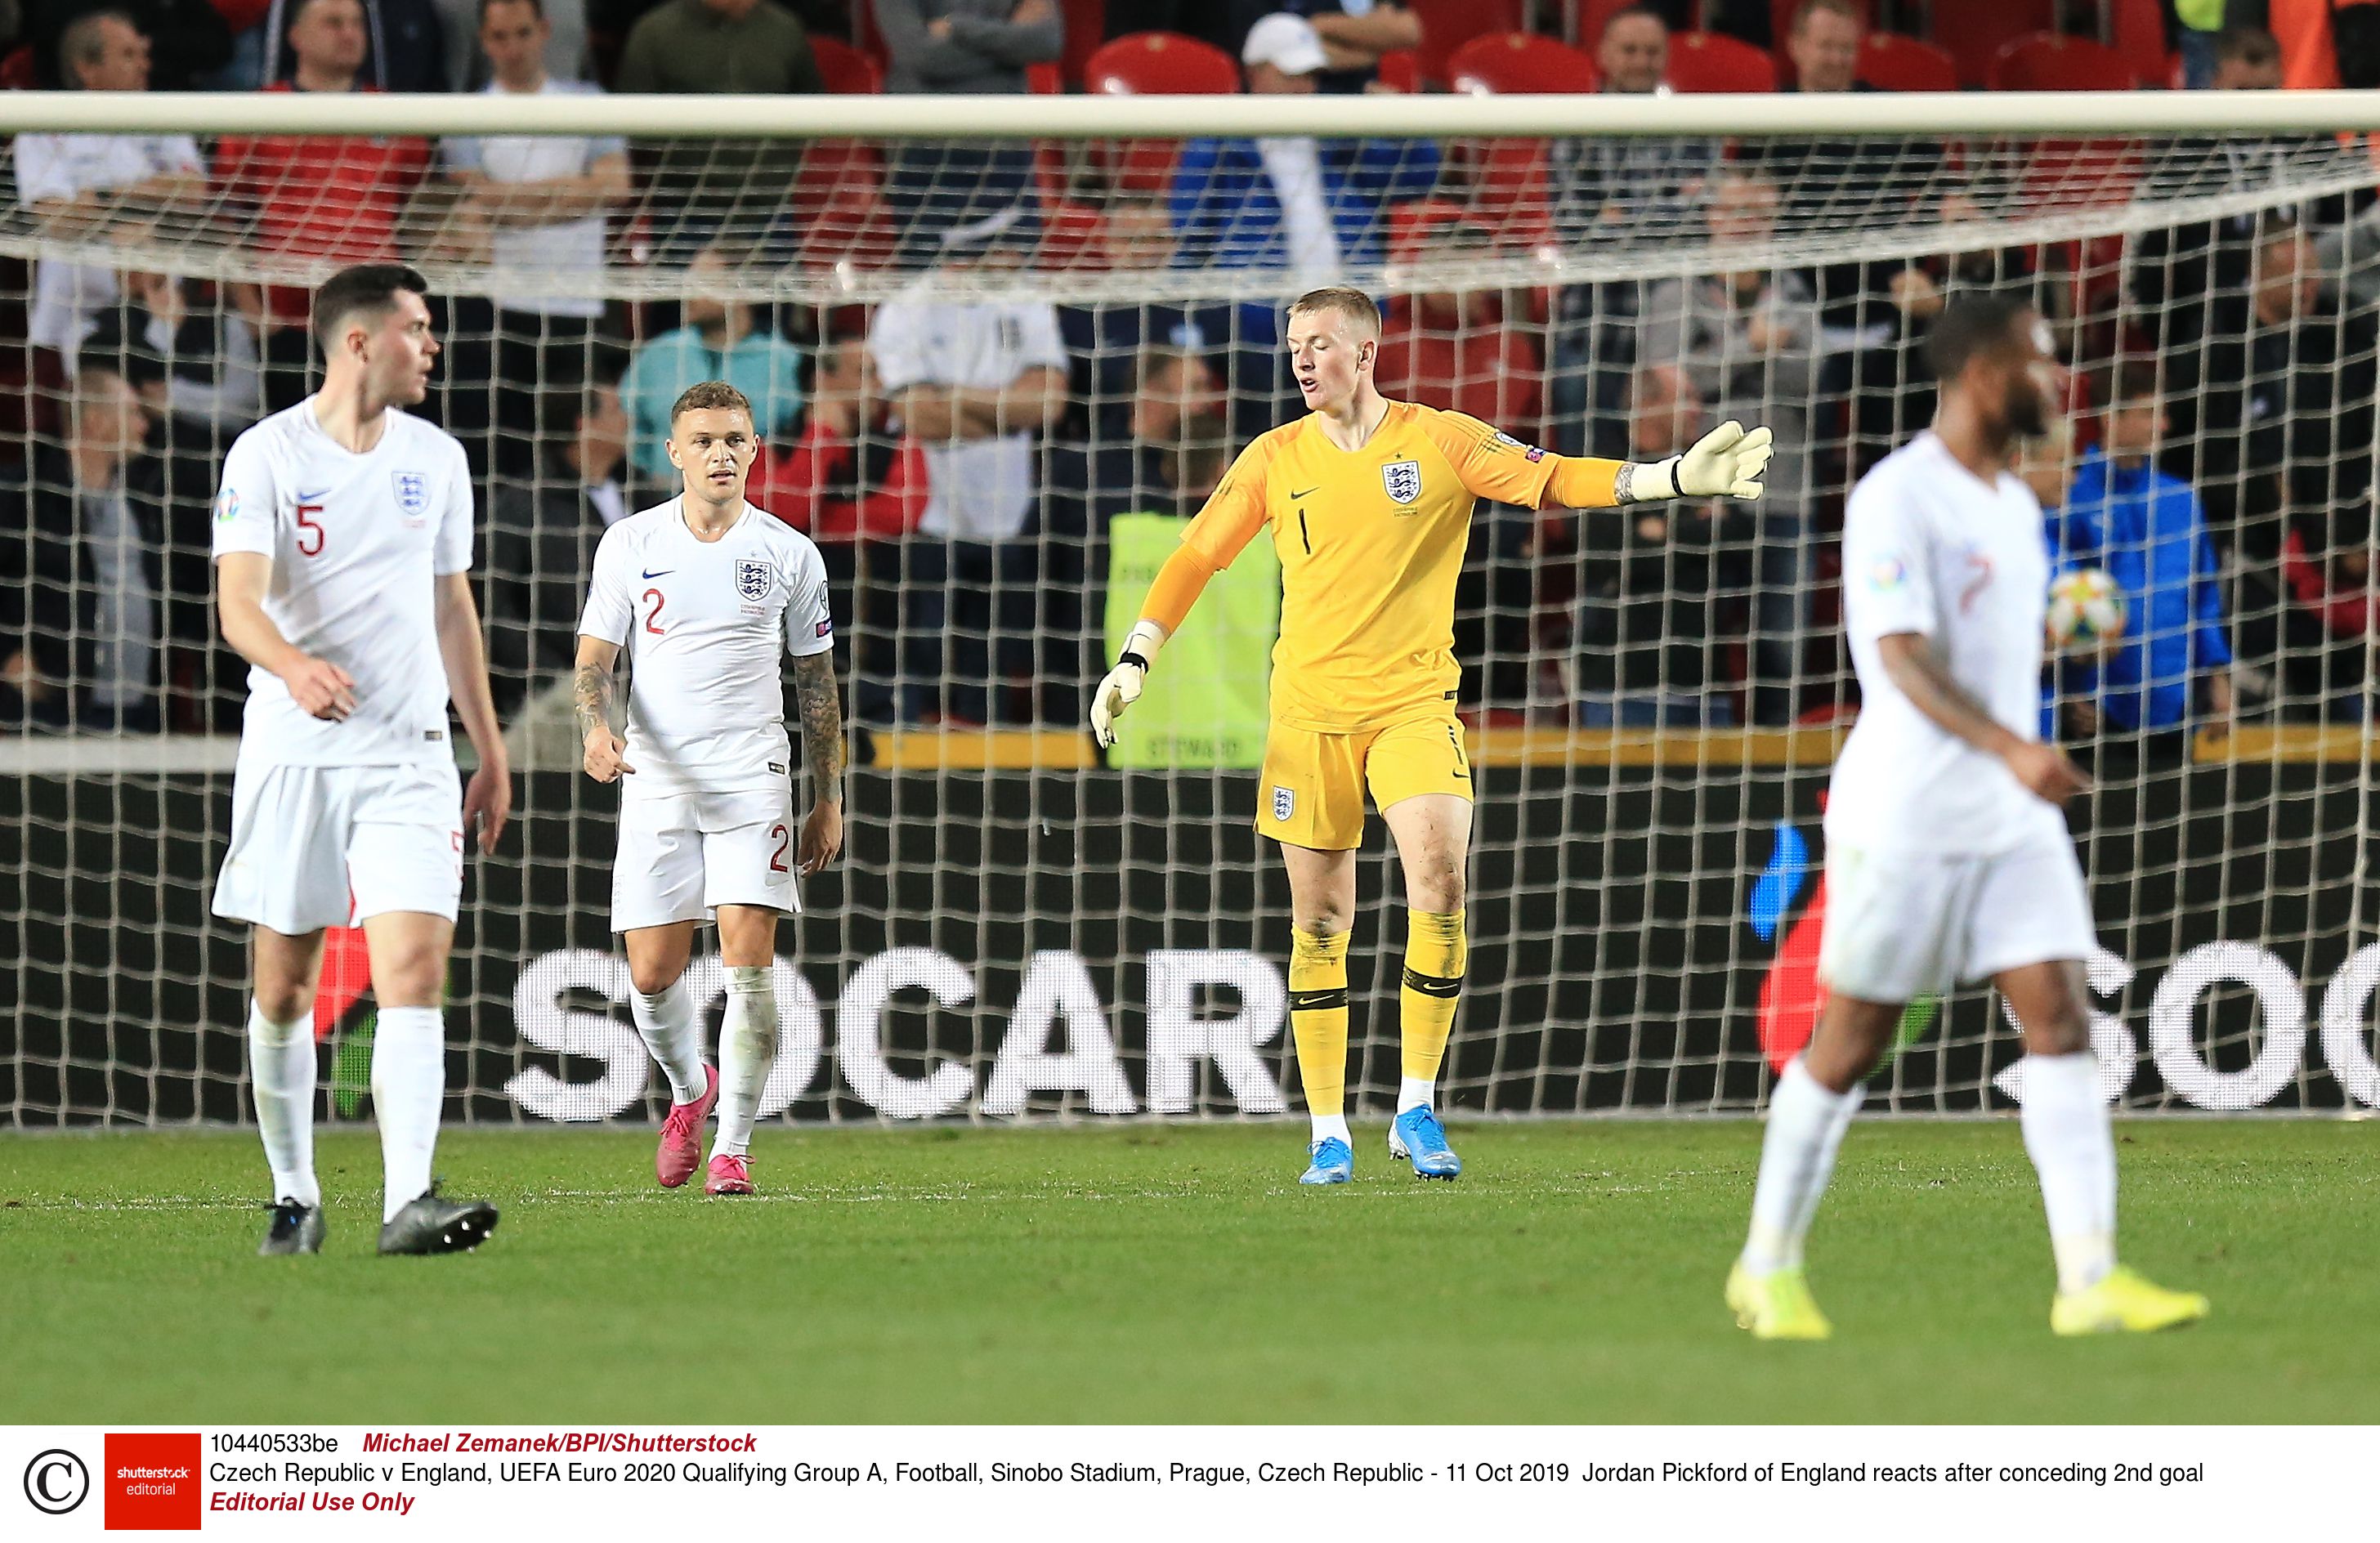 England suffer shock defeat to Czech Republic